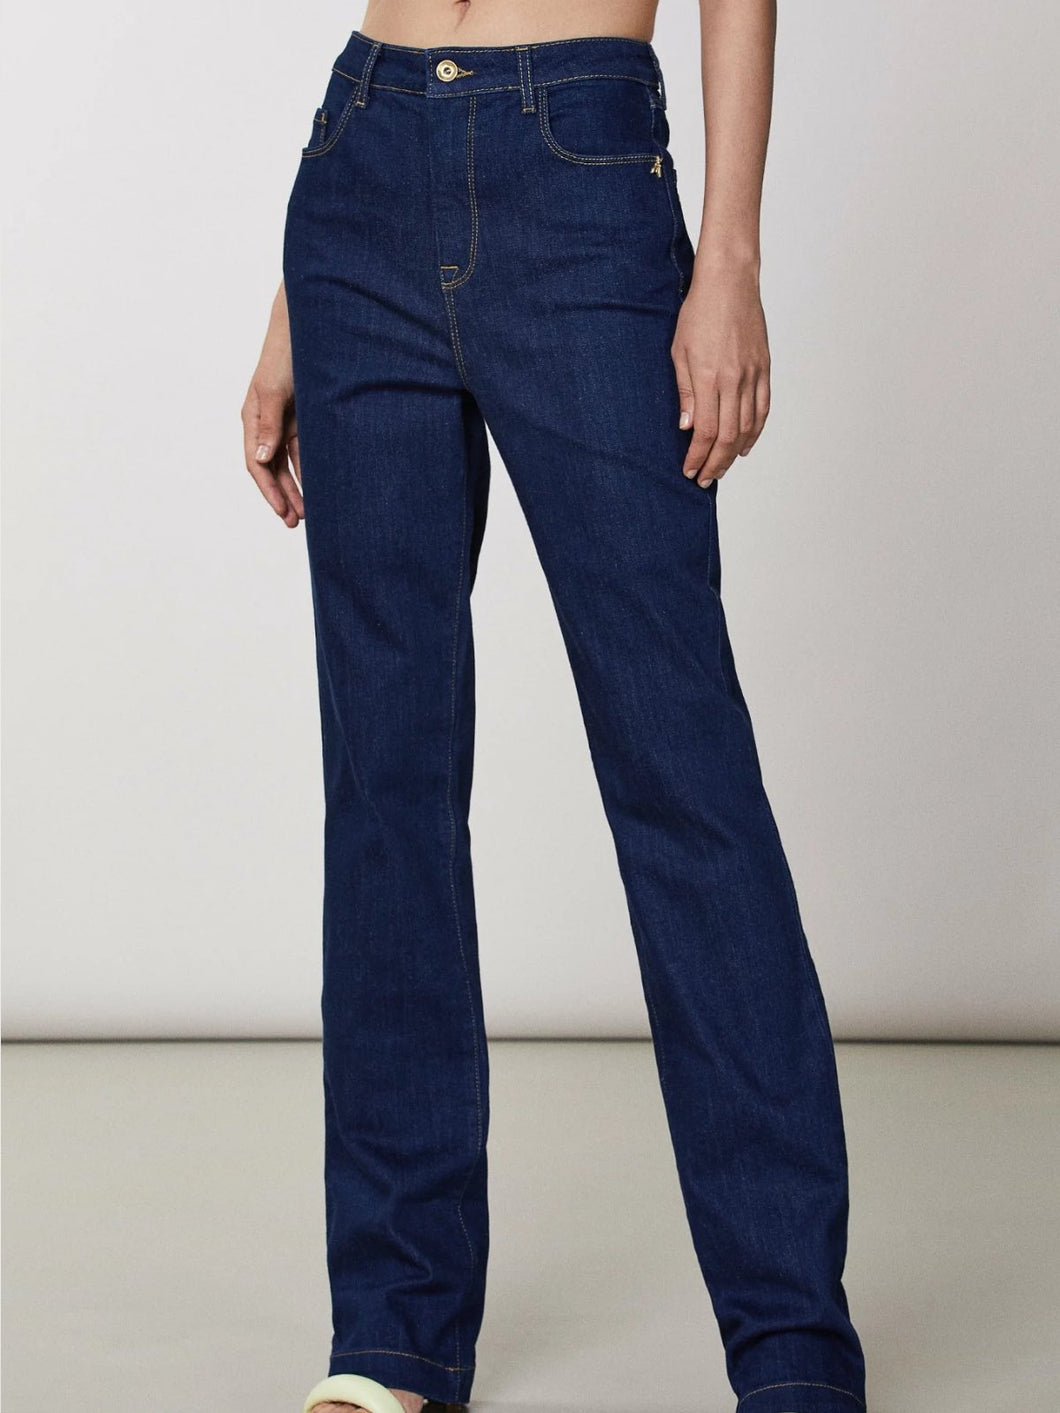 patrizia-pepe-Essential-low-rise-slim-jeans-bowns